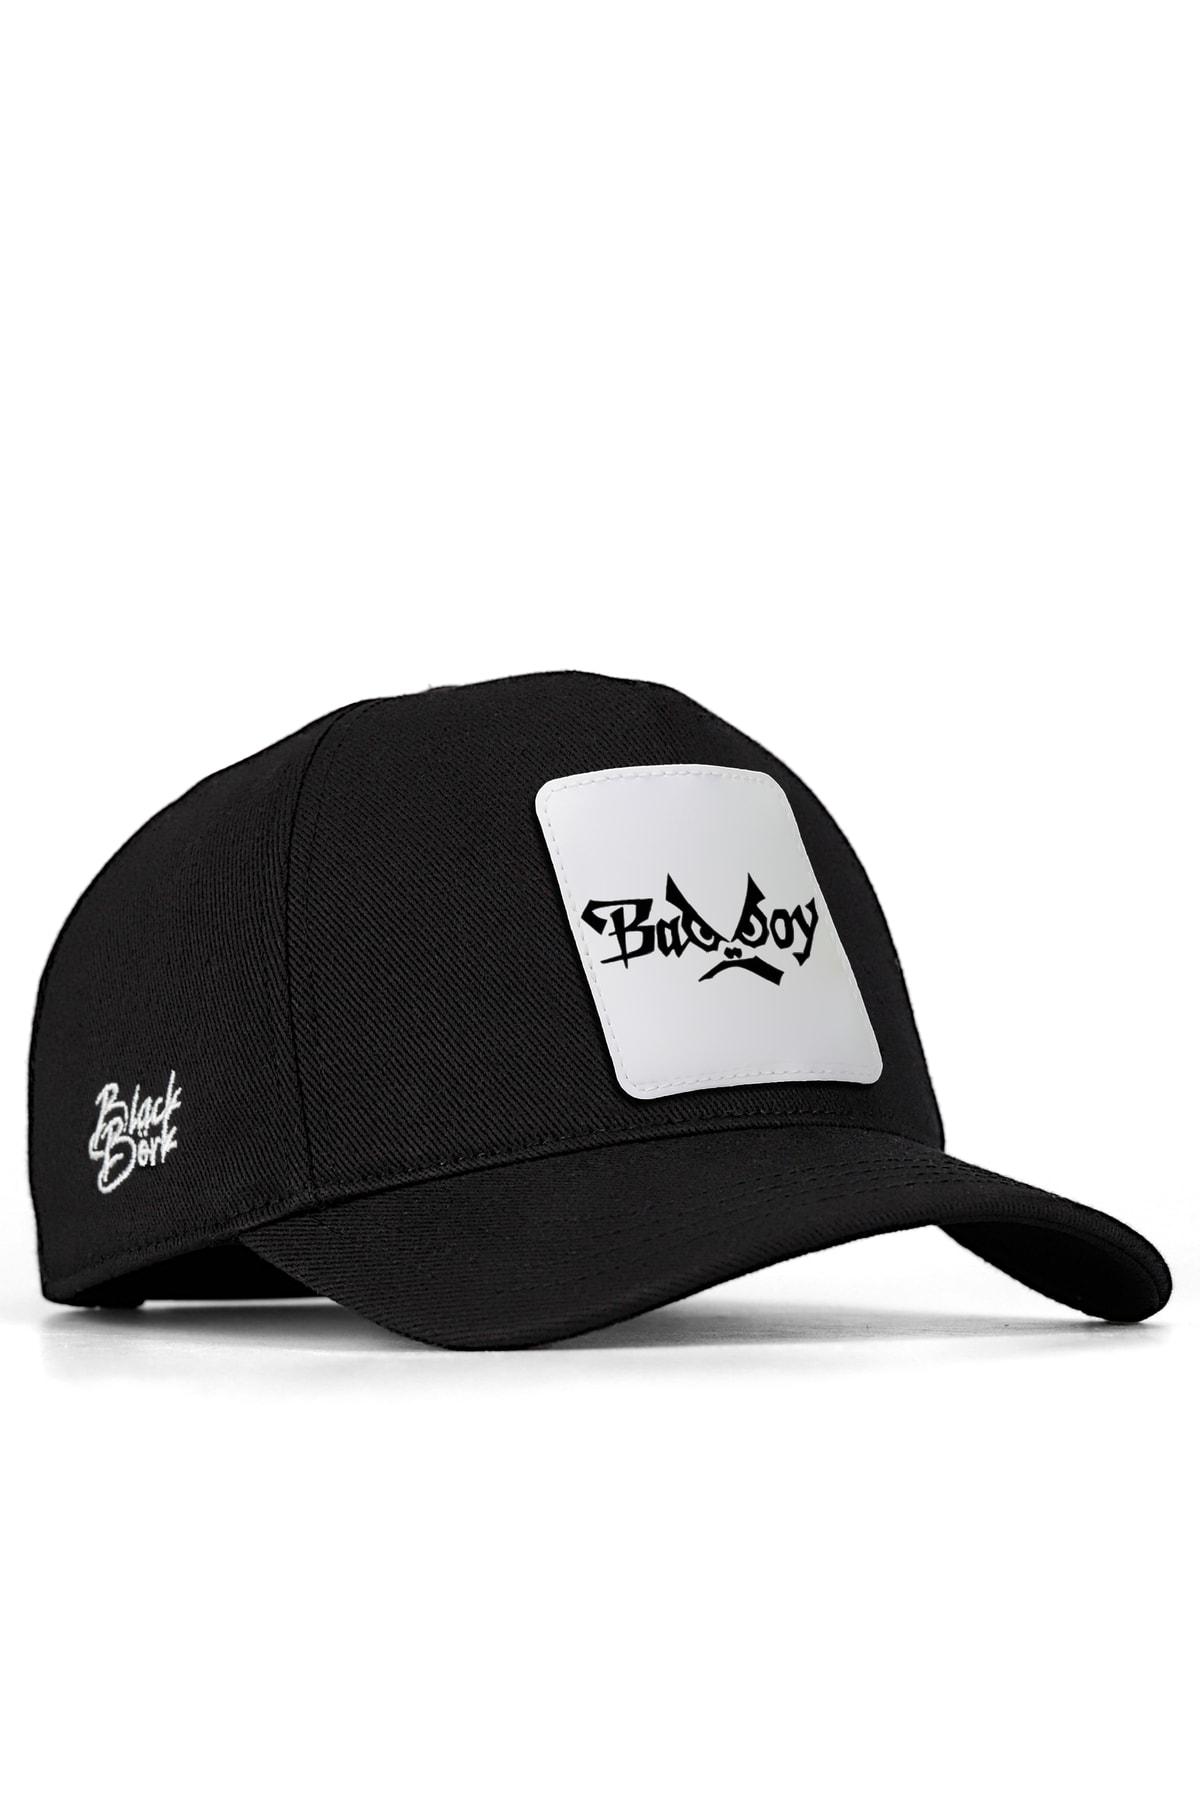 BlackBörk V1 Unisex Baseball Bad Boy29 Logolu Siyah Cap Şapka